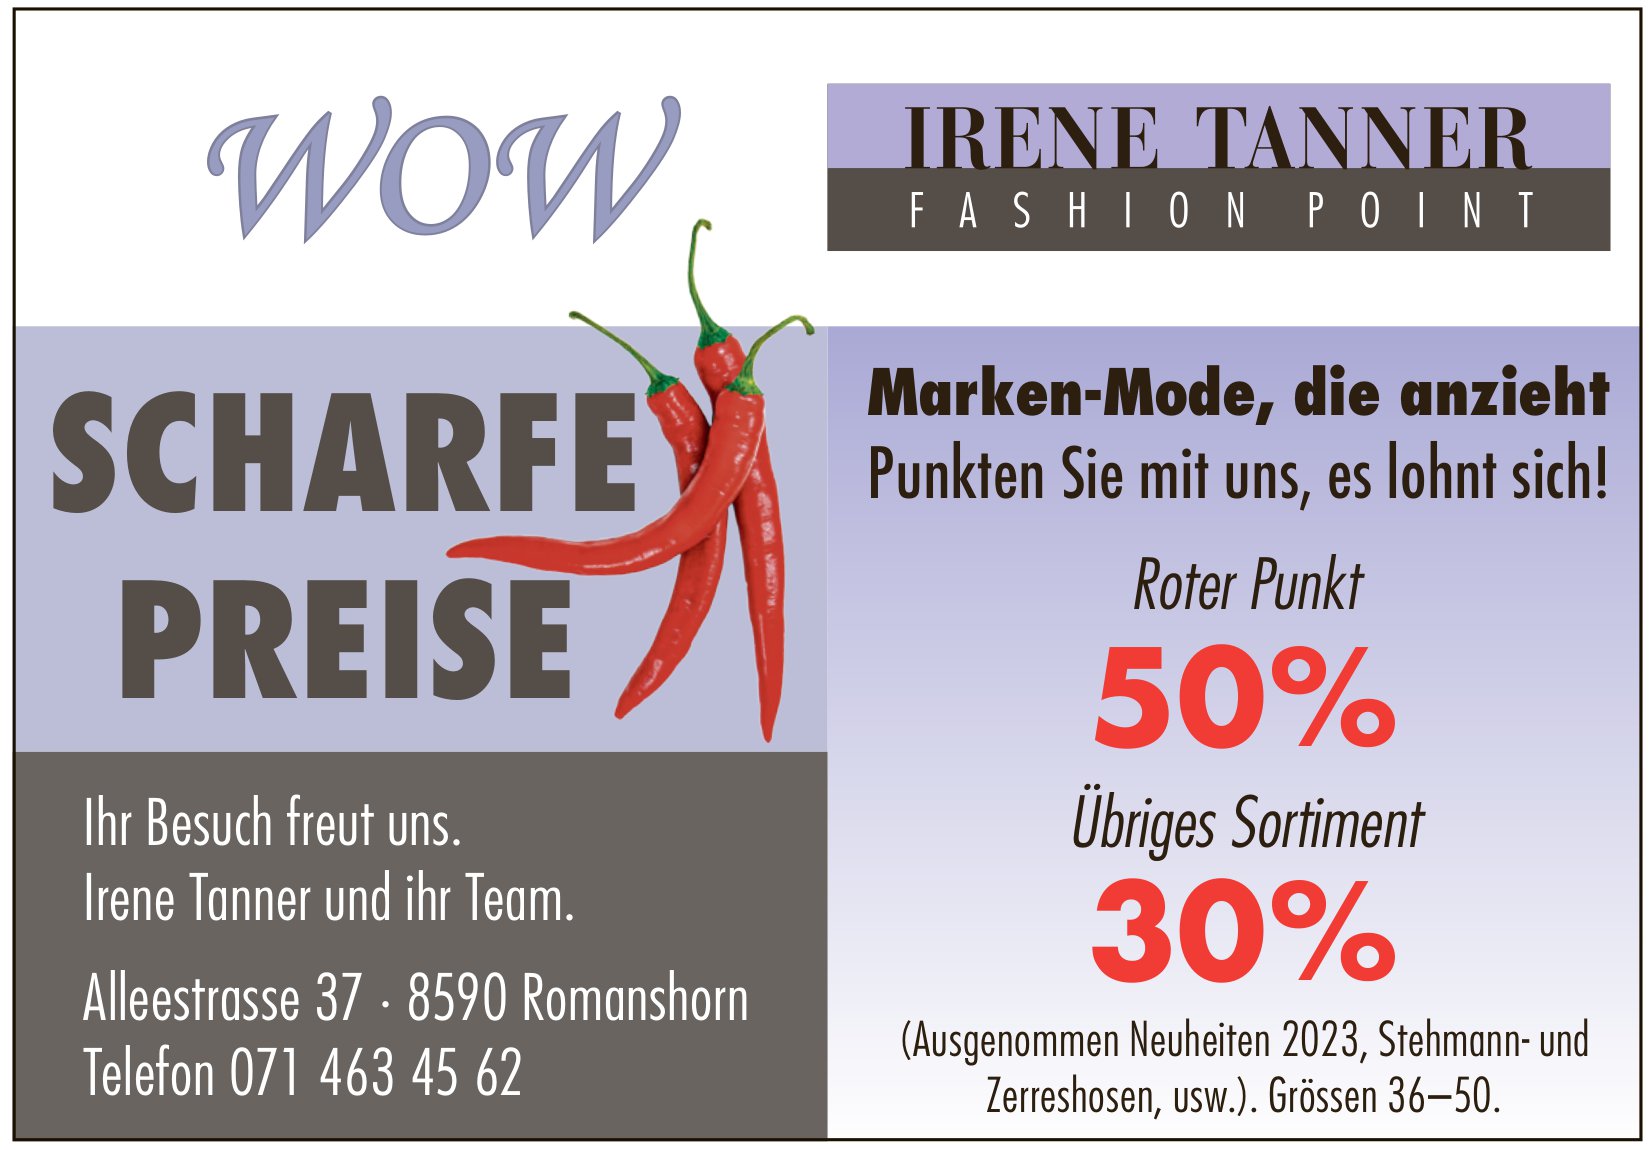 IRENE TANNER FASHION POINT, Romanshorn - WOW SCHARFE PREISE